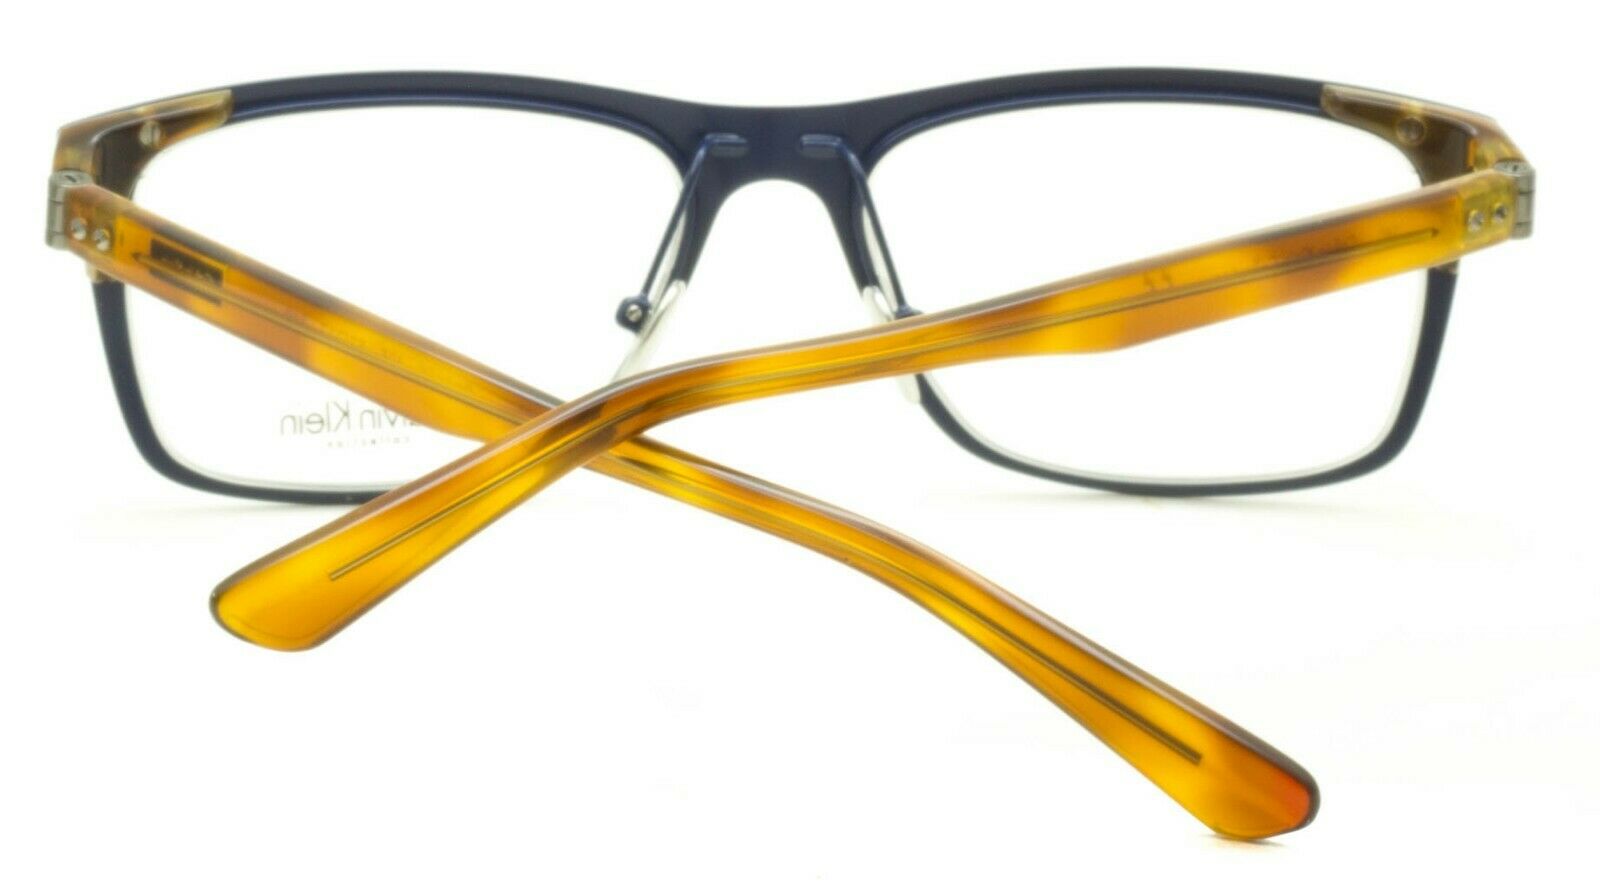 CALVIN KLEIN CK 8025 405 52mm Eyewear RX Optical FRAMES Eyeglasses Glasses - New